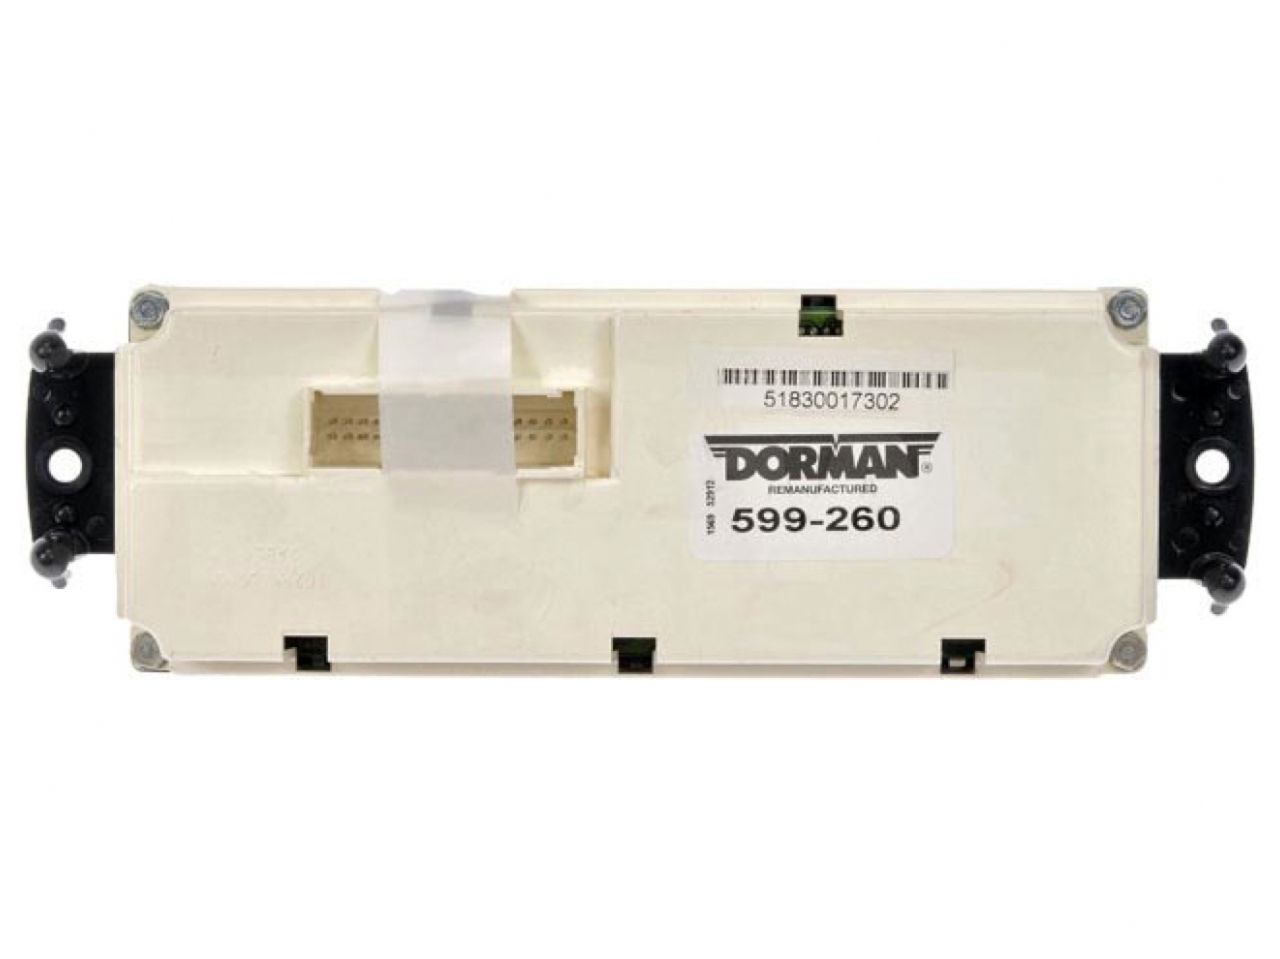 Dorman Re-manufactured Climate Control Module